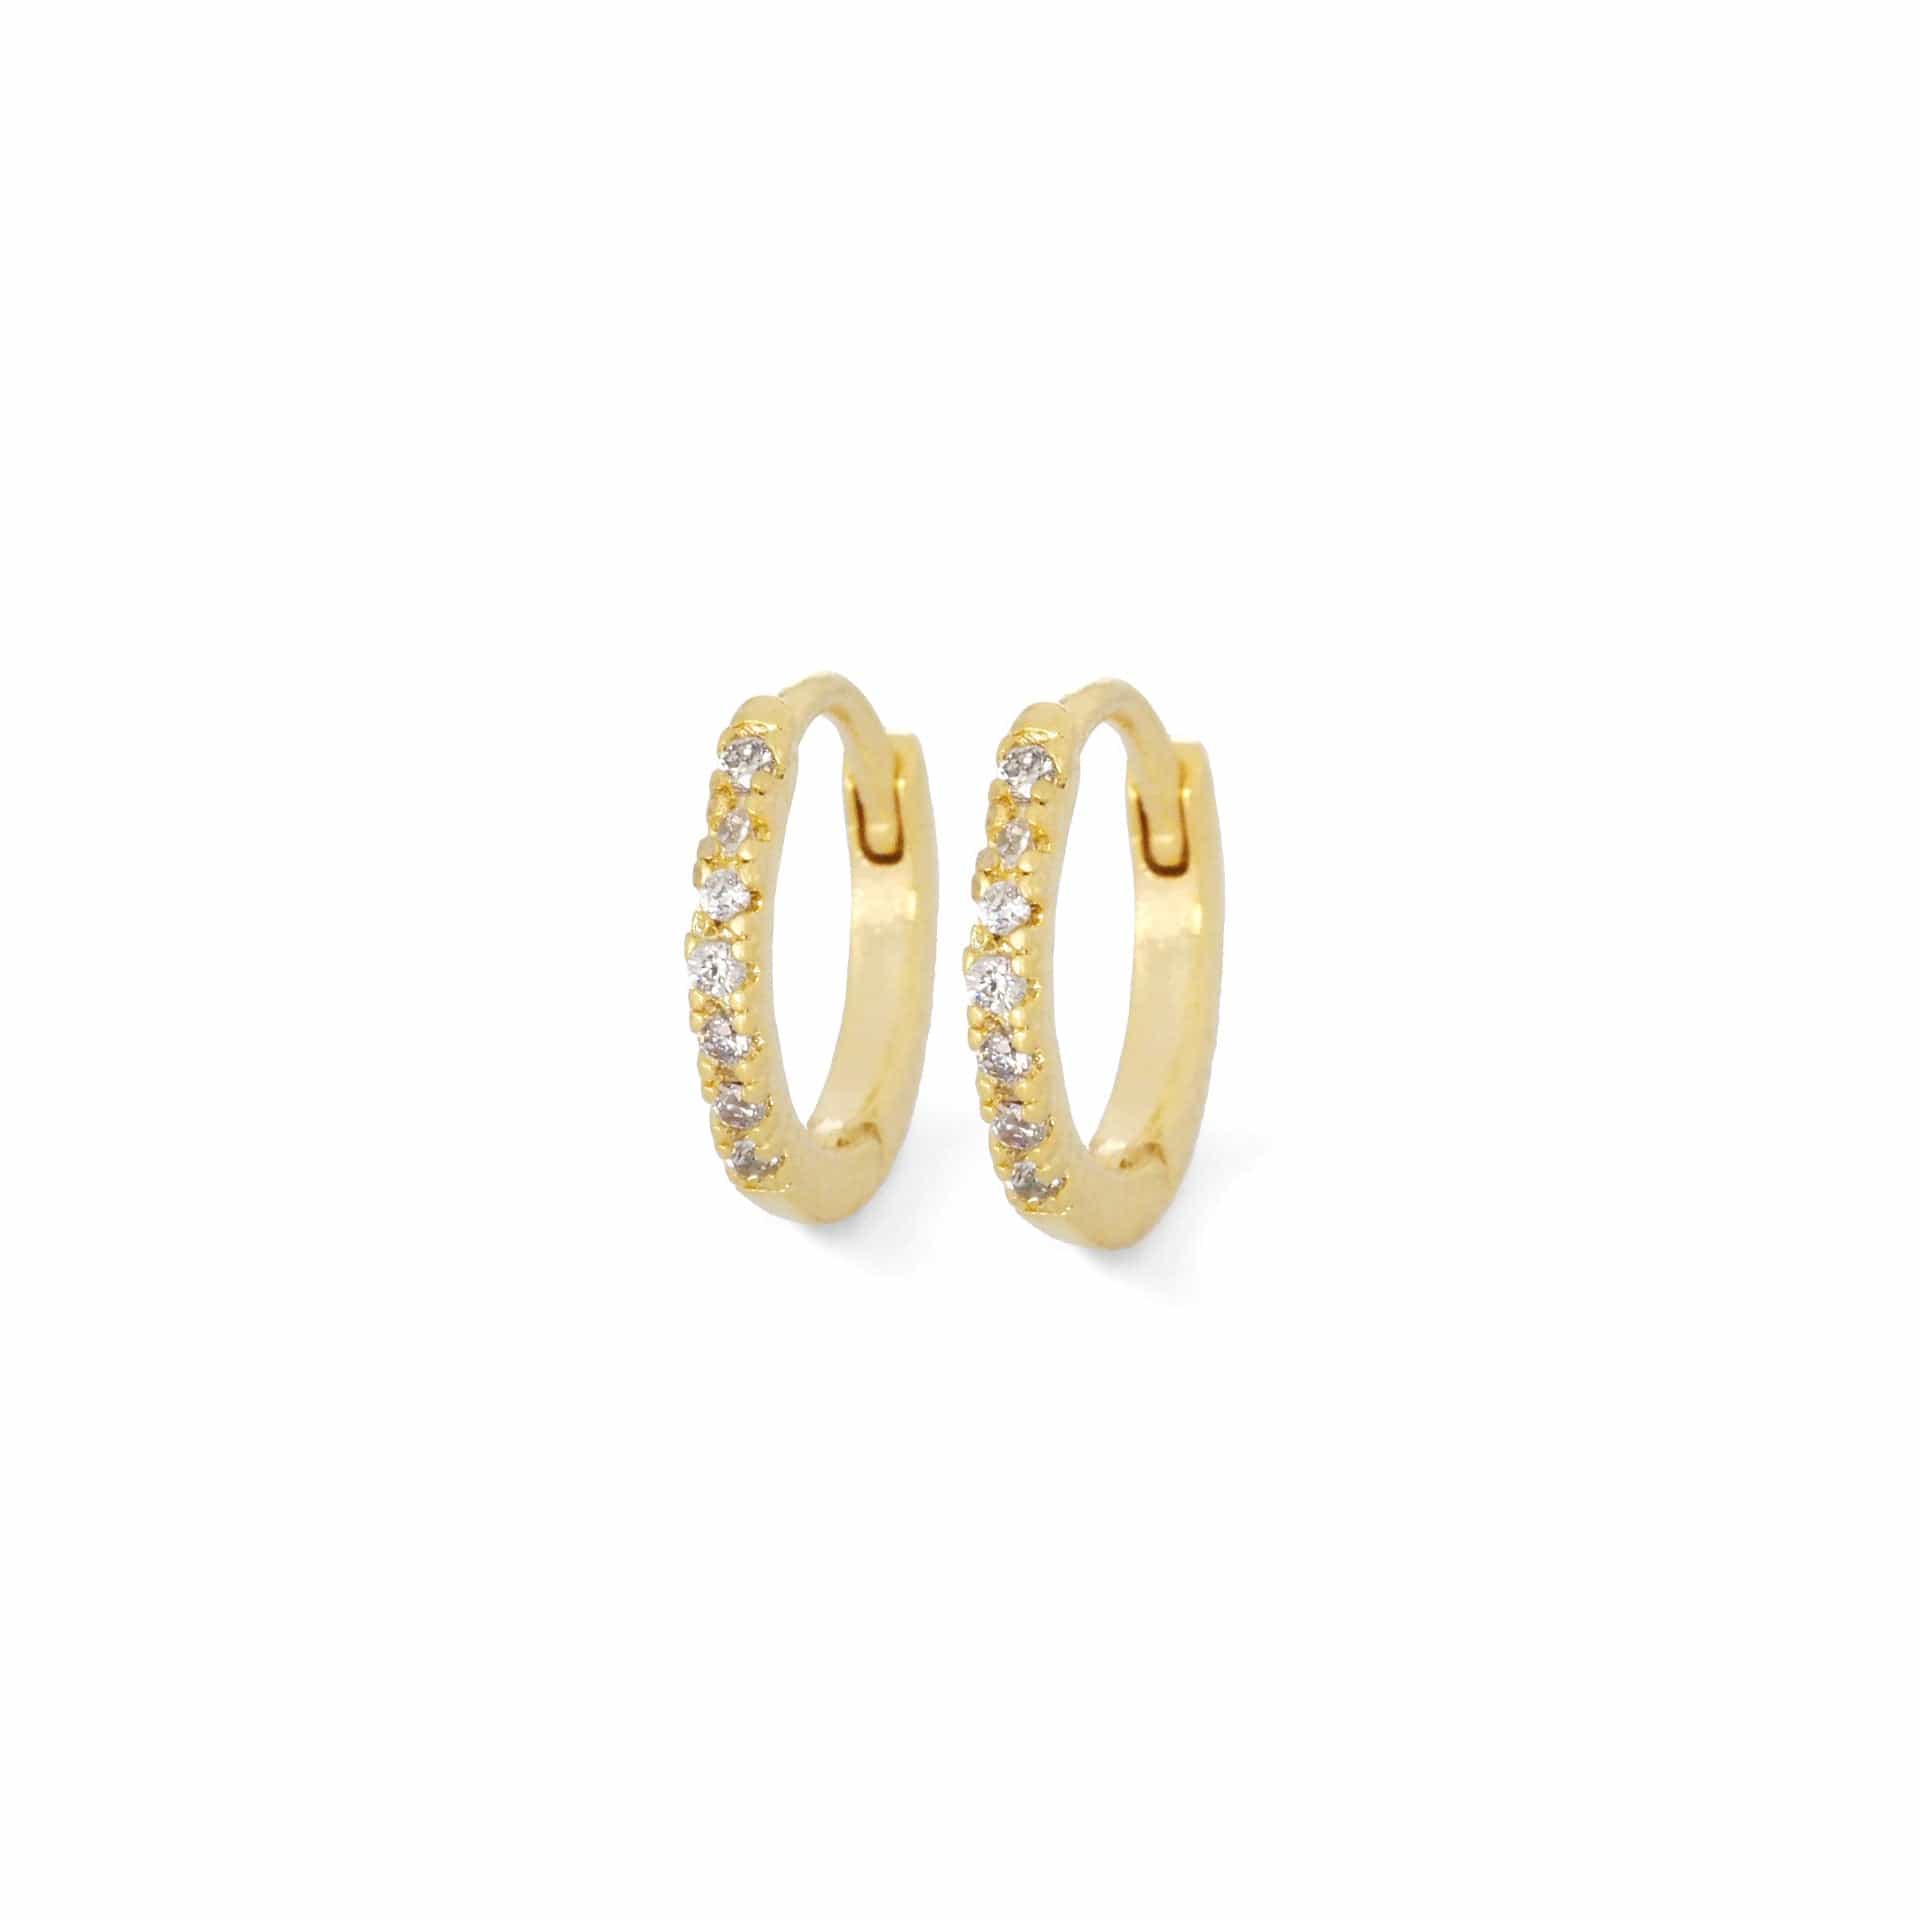 TAI JEWELRY Earrings SMALL / GOLD Cubic Zirconia Huggie Earrings